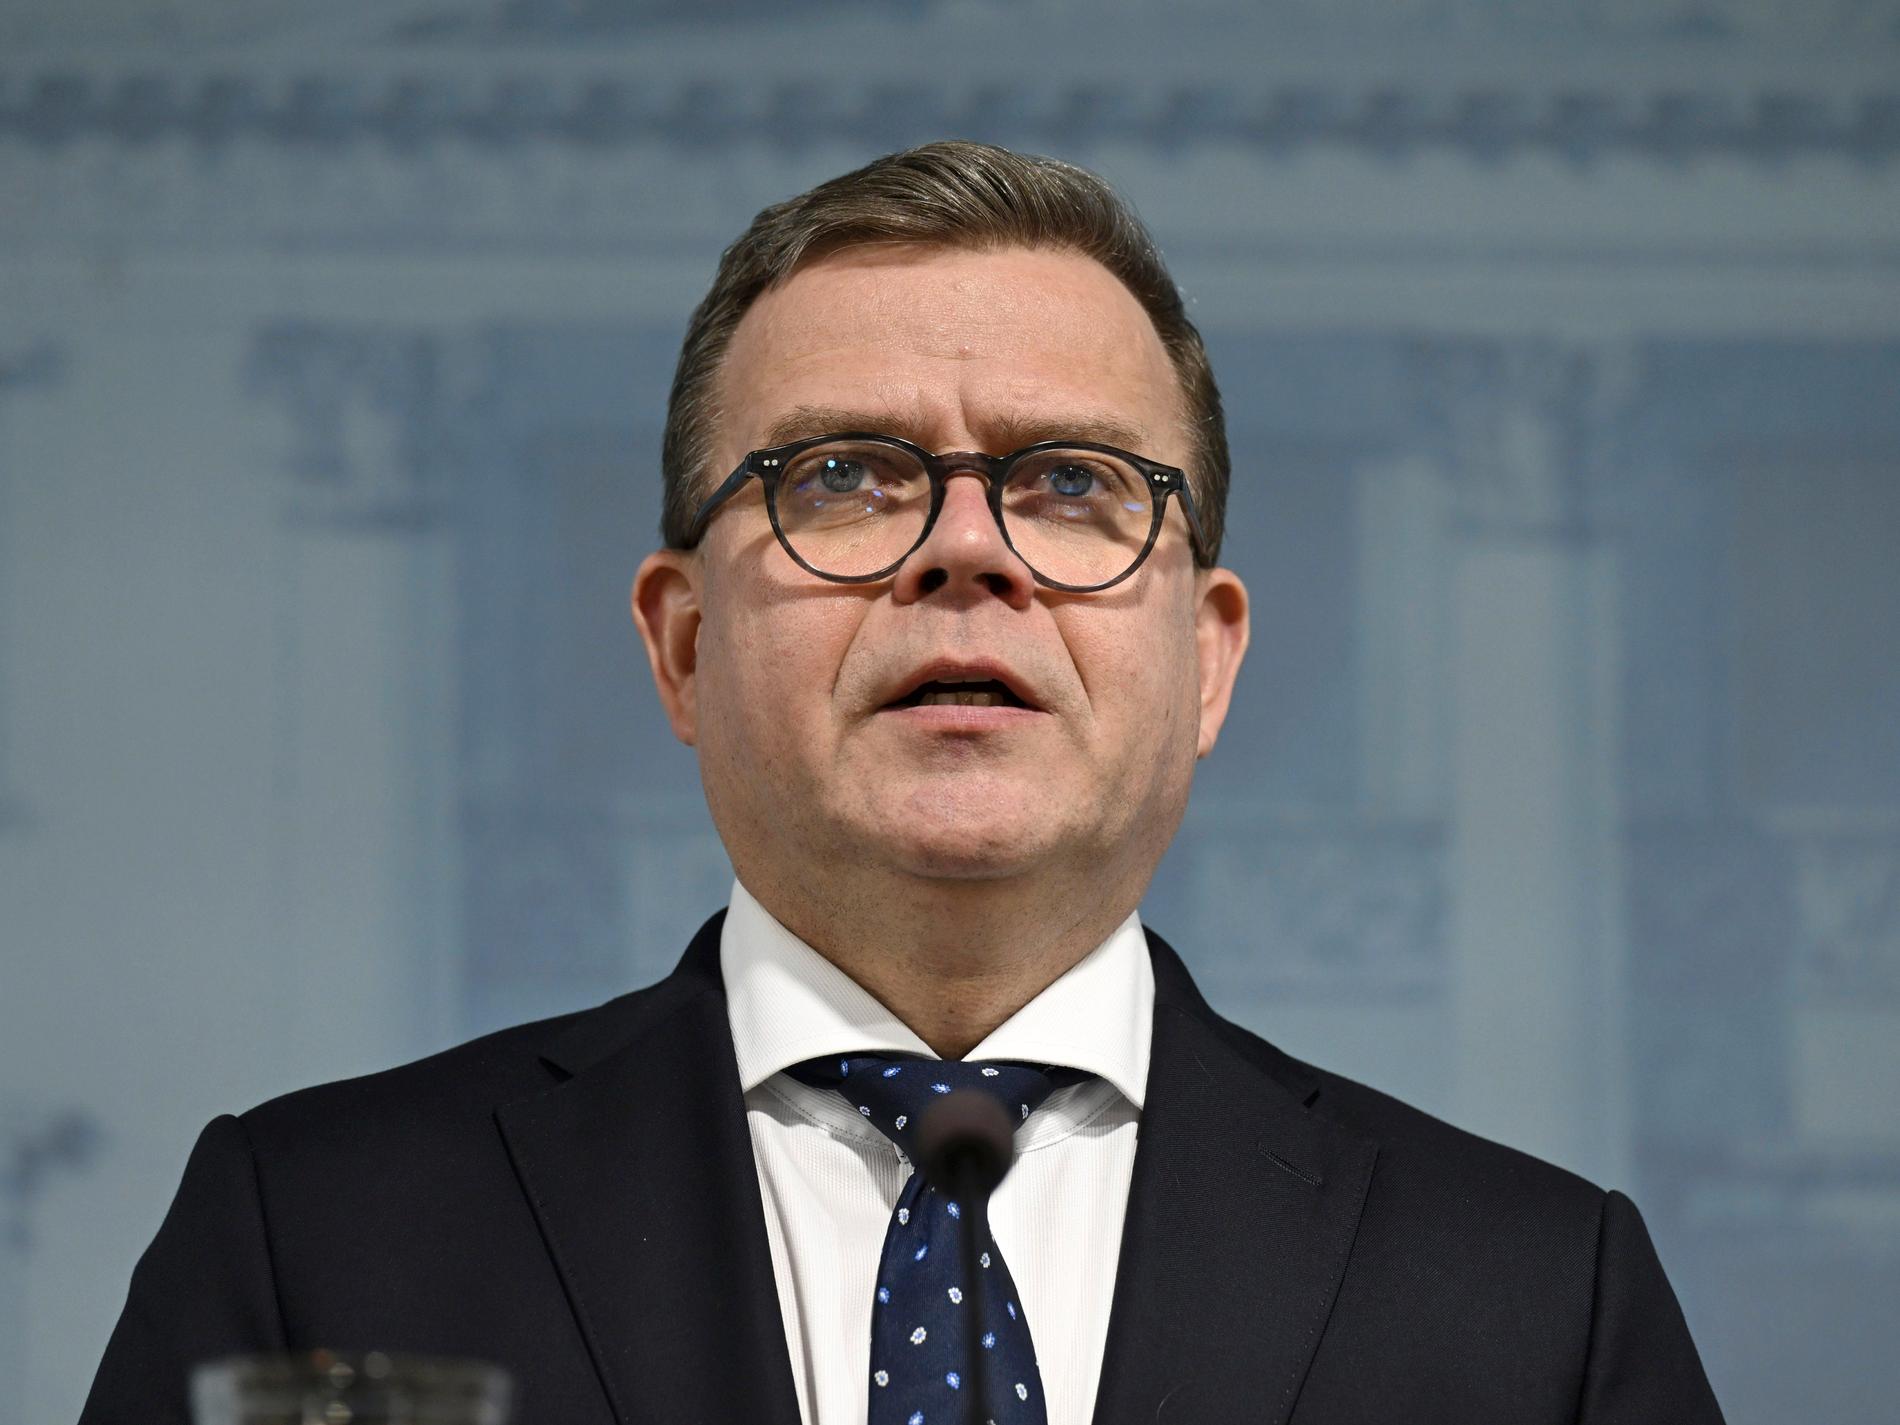 Finland utlyser sorgedag efter skoldåd